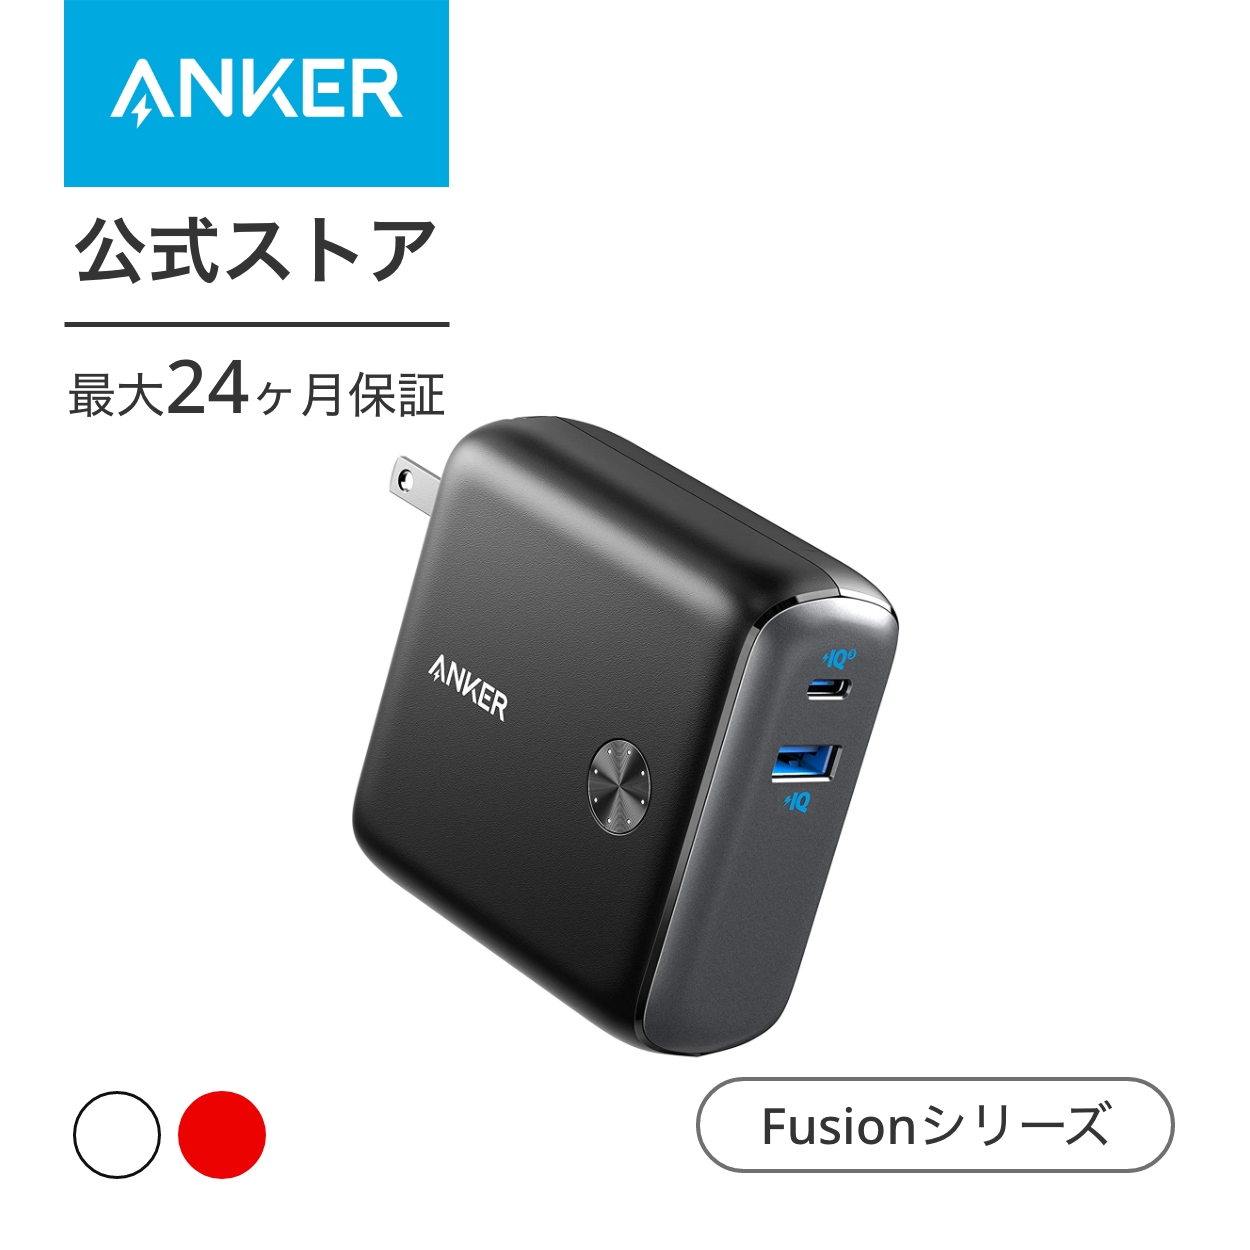 Anker A1623113 （PowerCore Fusion 10000 9700mAh ブラック） PowerCore モバイルバッテリーの商品画像